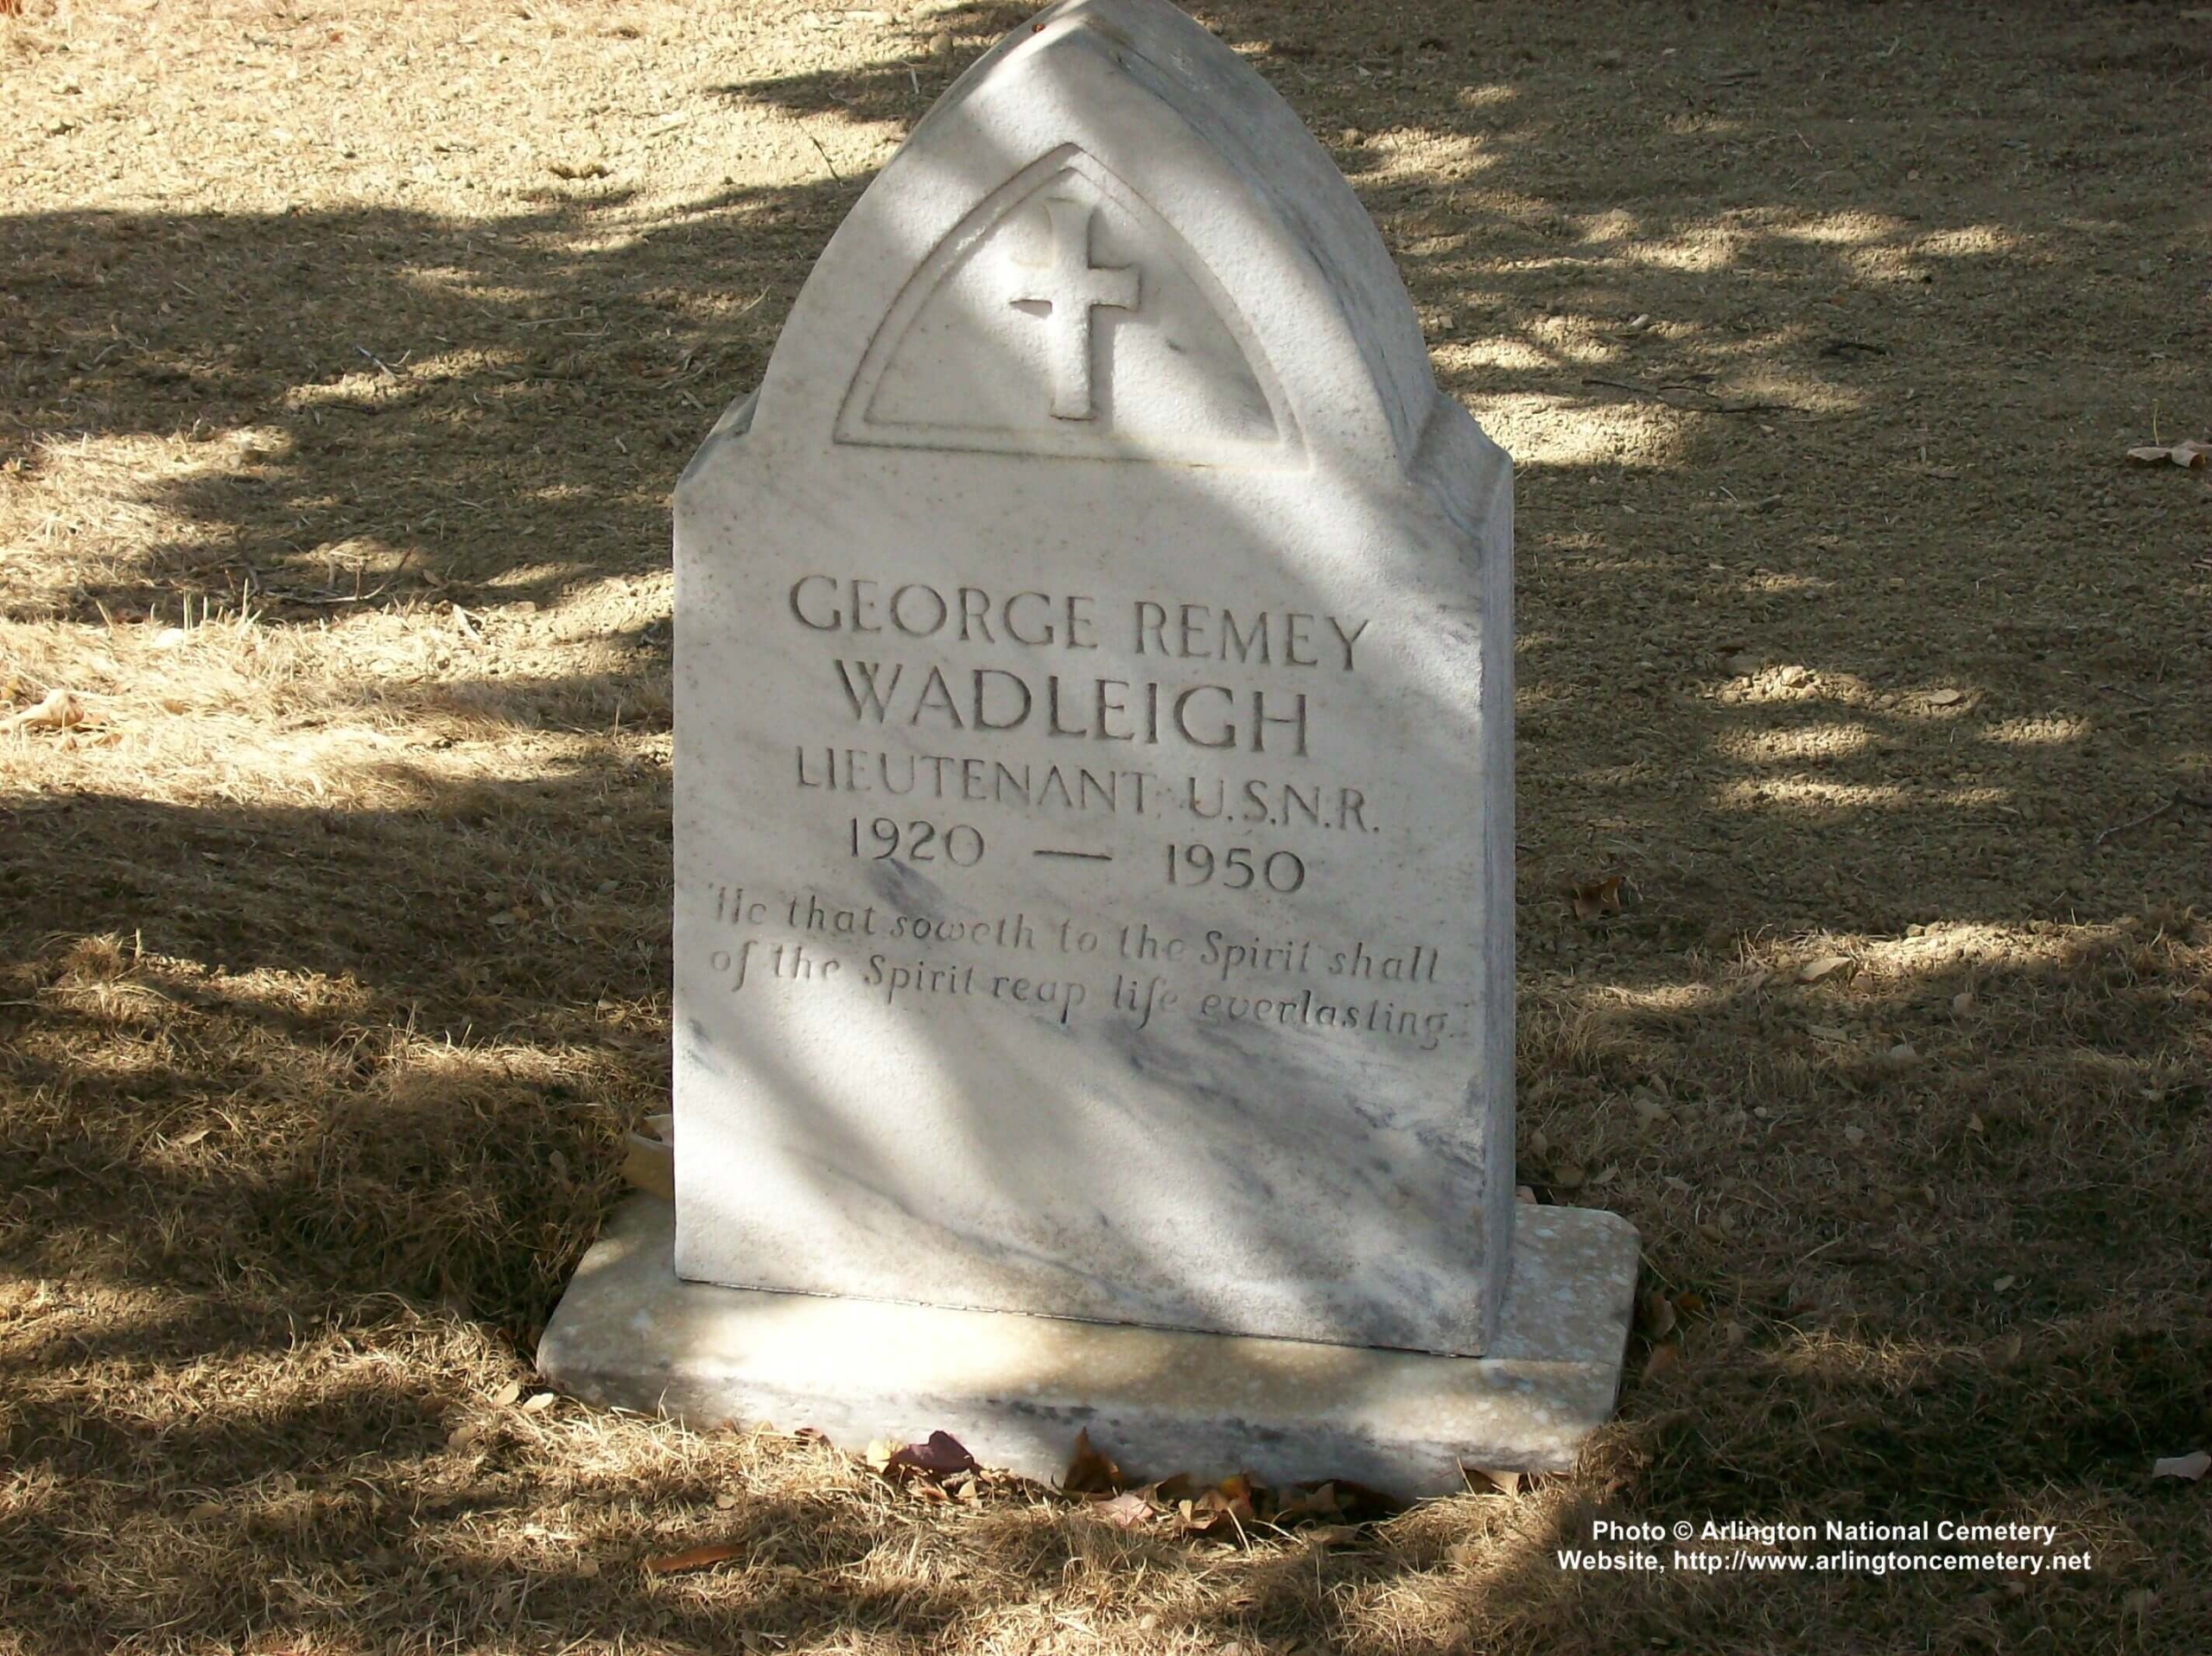 grwadleigh-gravesite-photo-october-2007-001